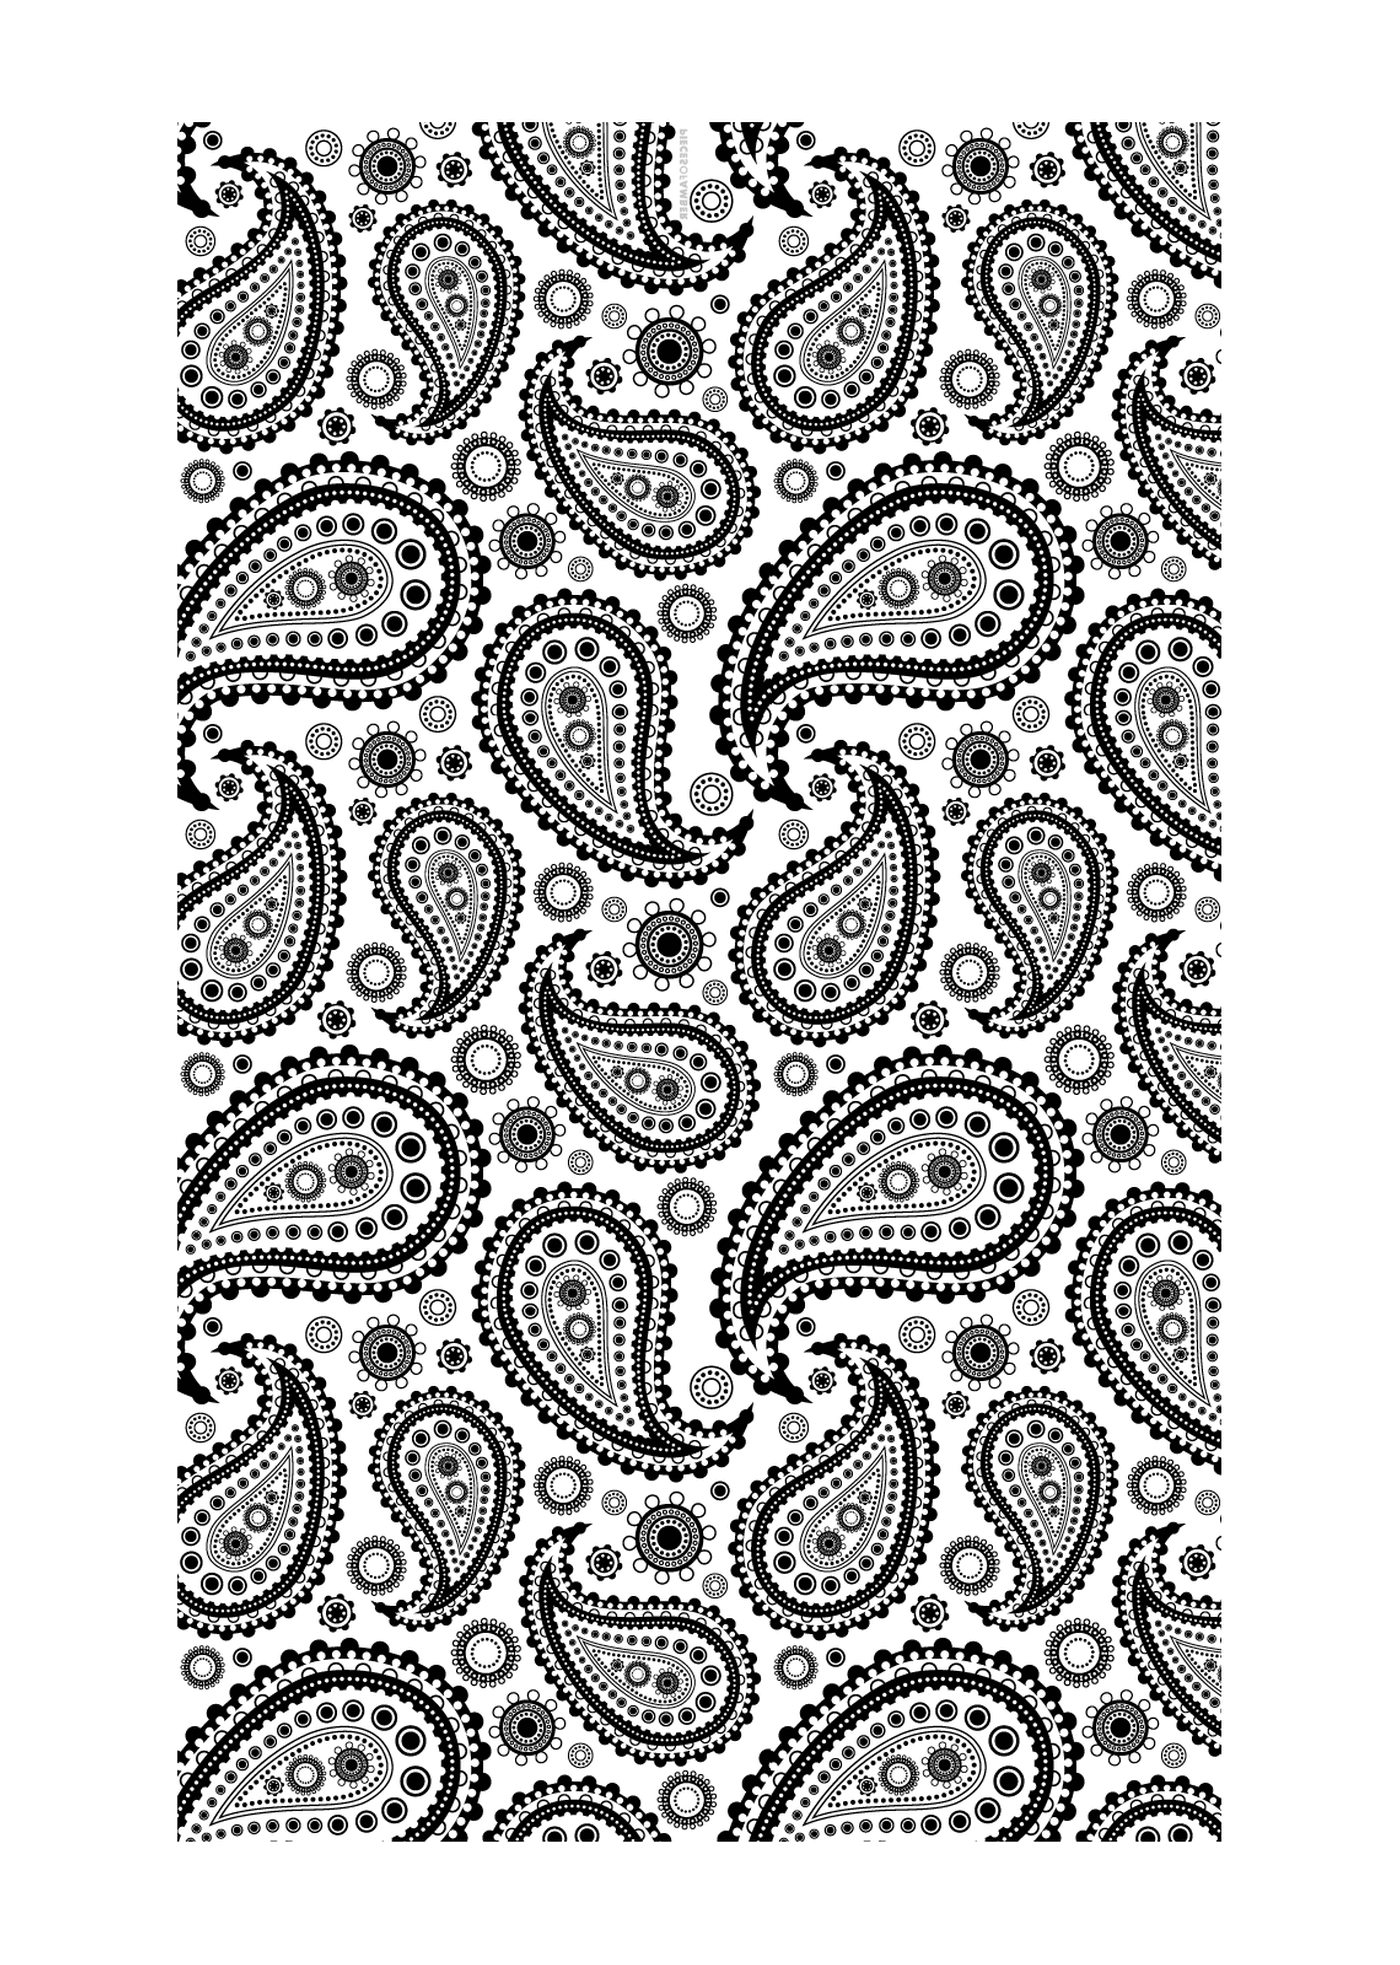  A Paisley design pattern 